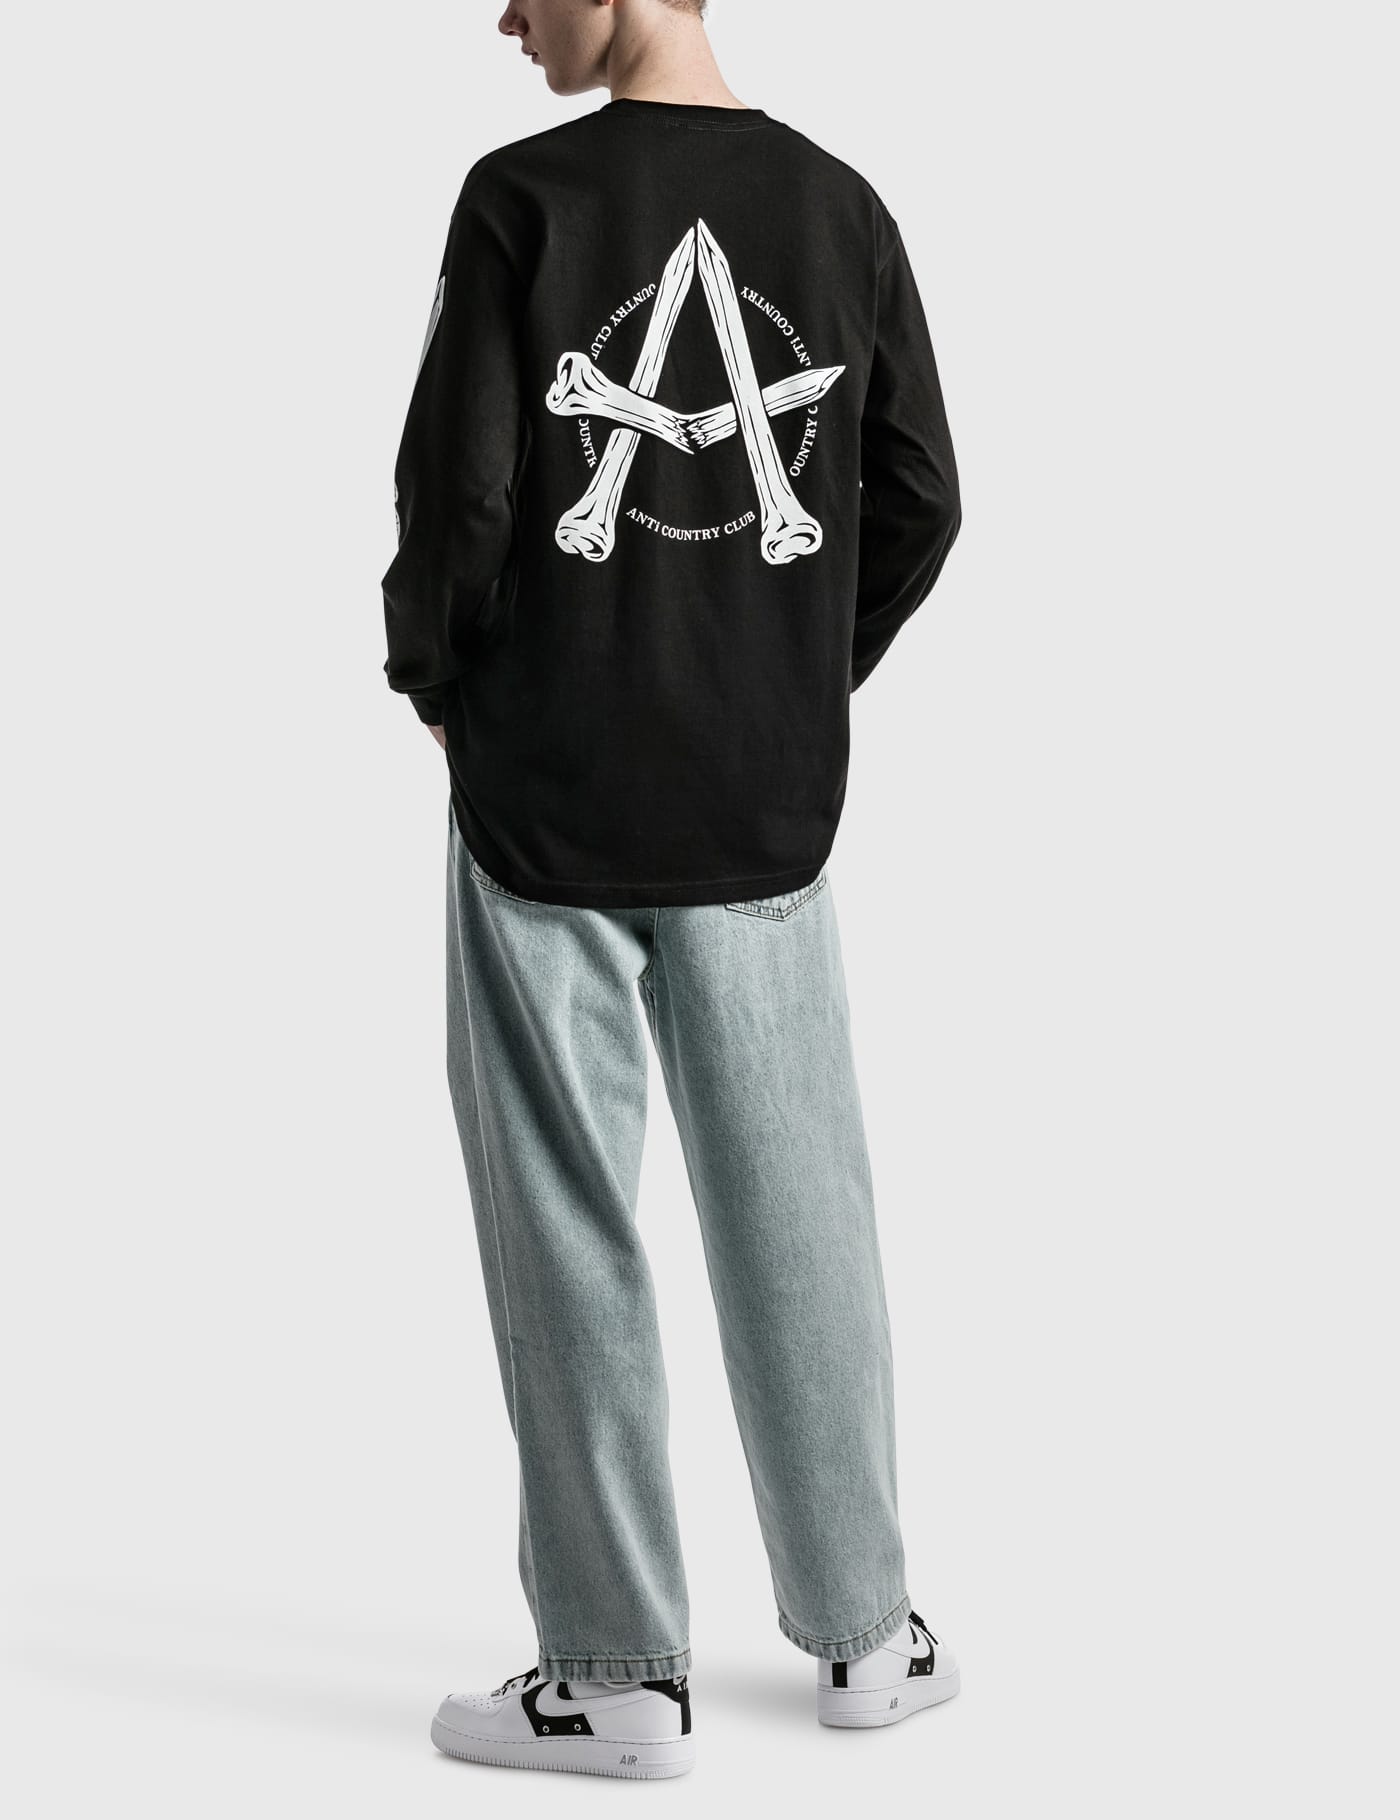 ANTI COUNTRY CLUB - 東京アナーキー ロゴ スウェットシャツ | HBX ...